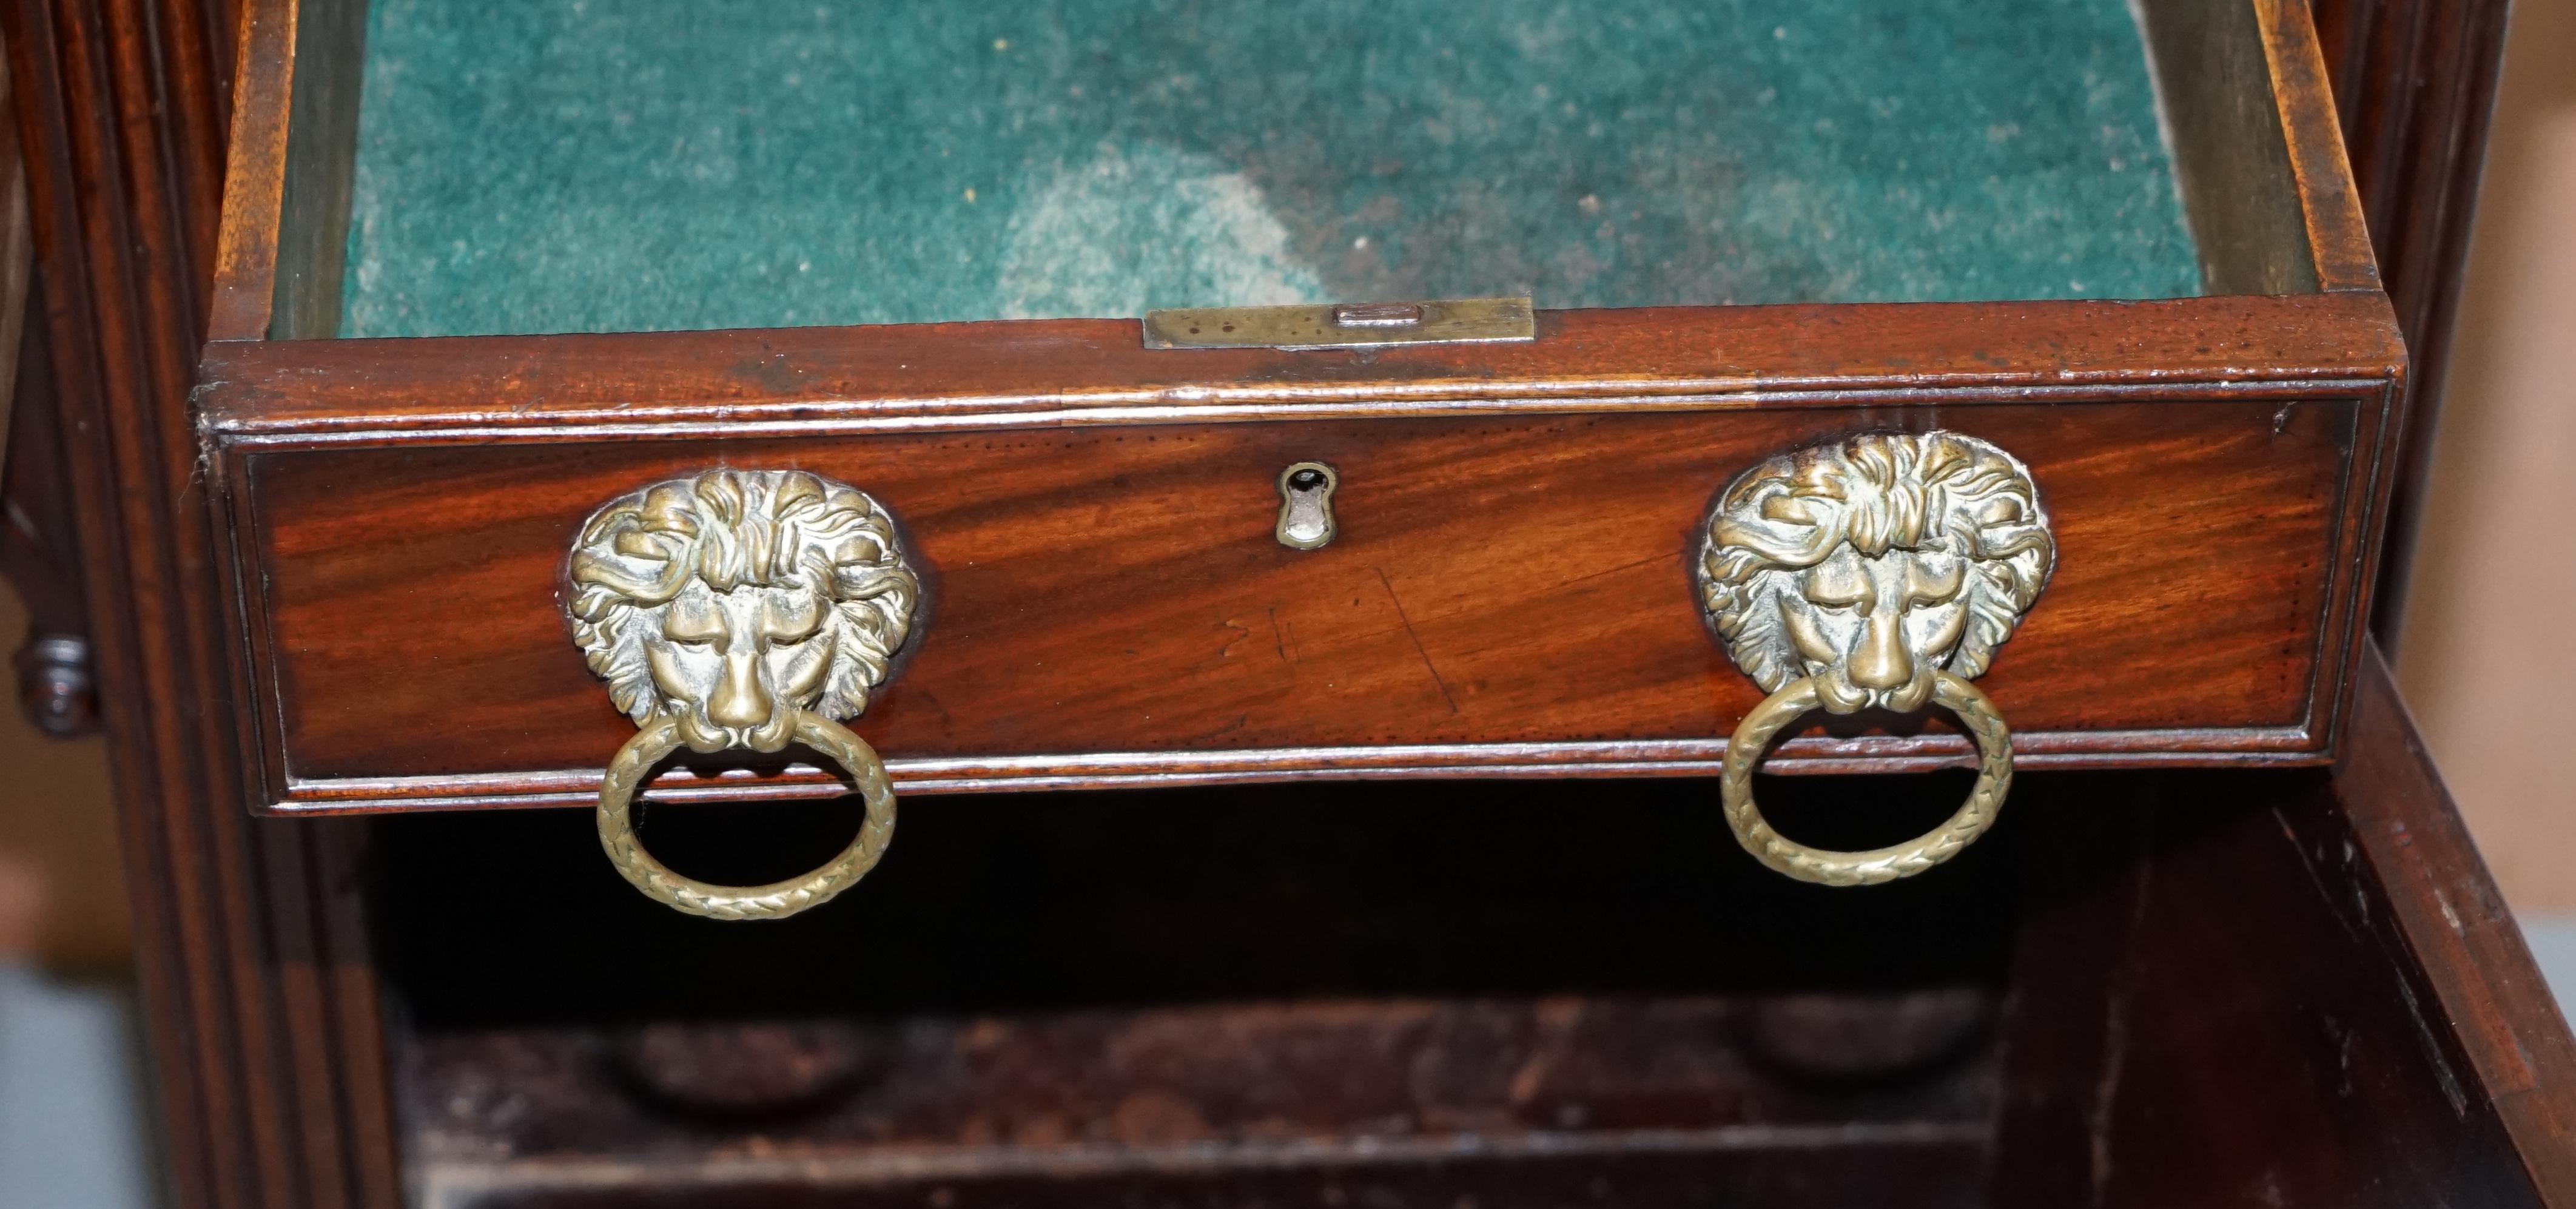 Original 1790 Georgian Irish Hardwood Sideboard with Brass Gallery Lion Handles For Sale 13